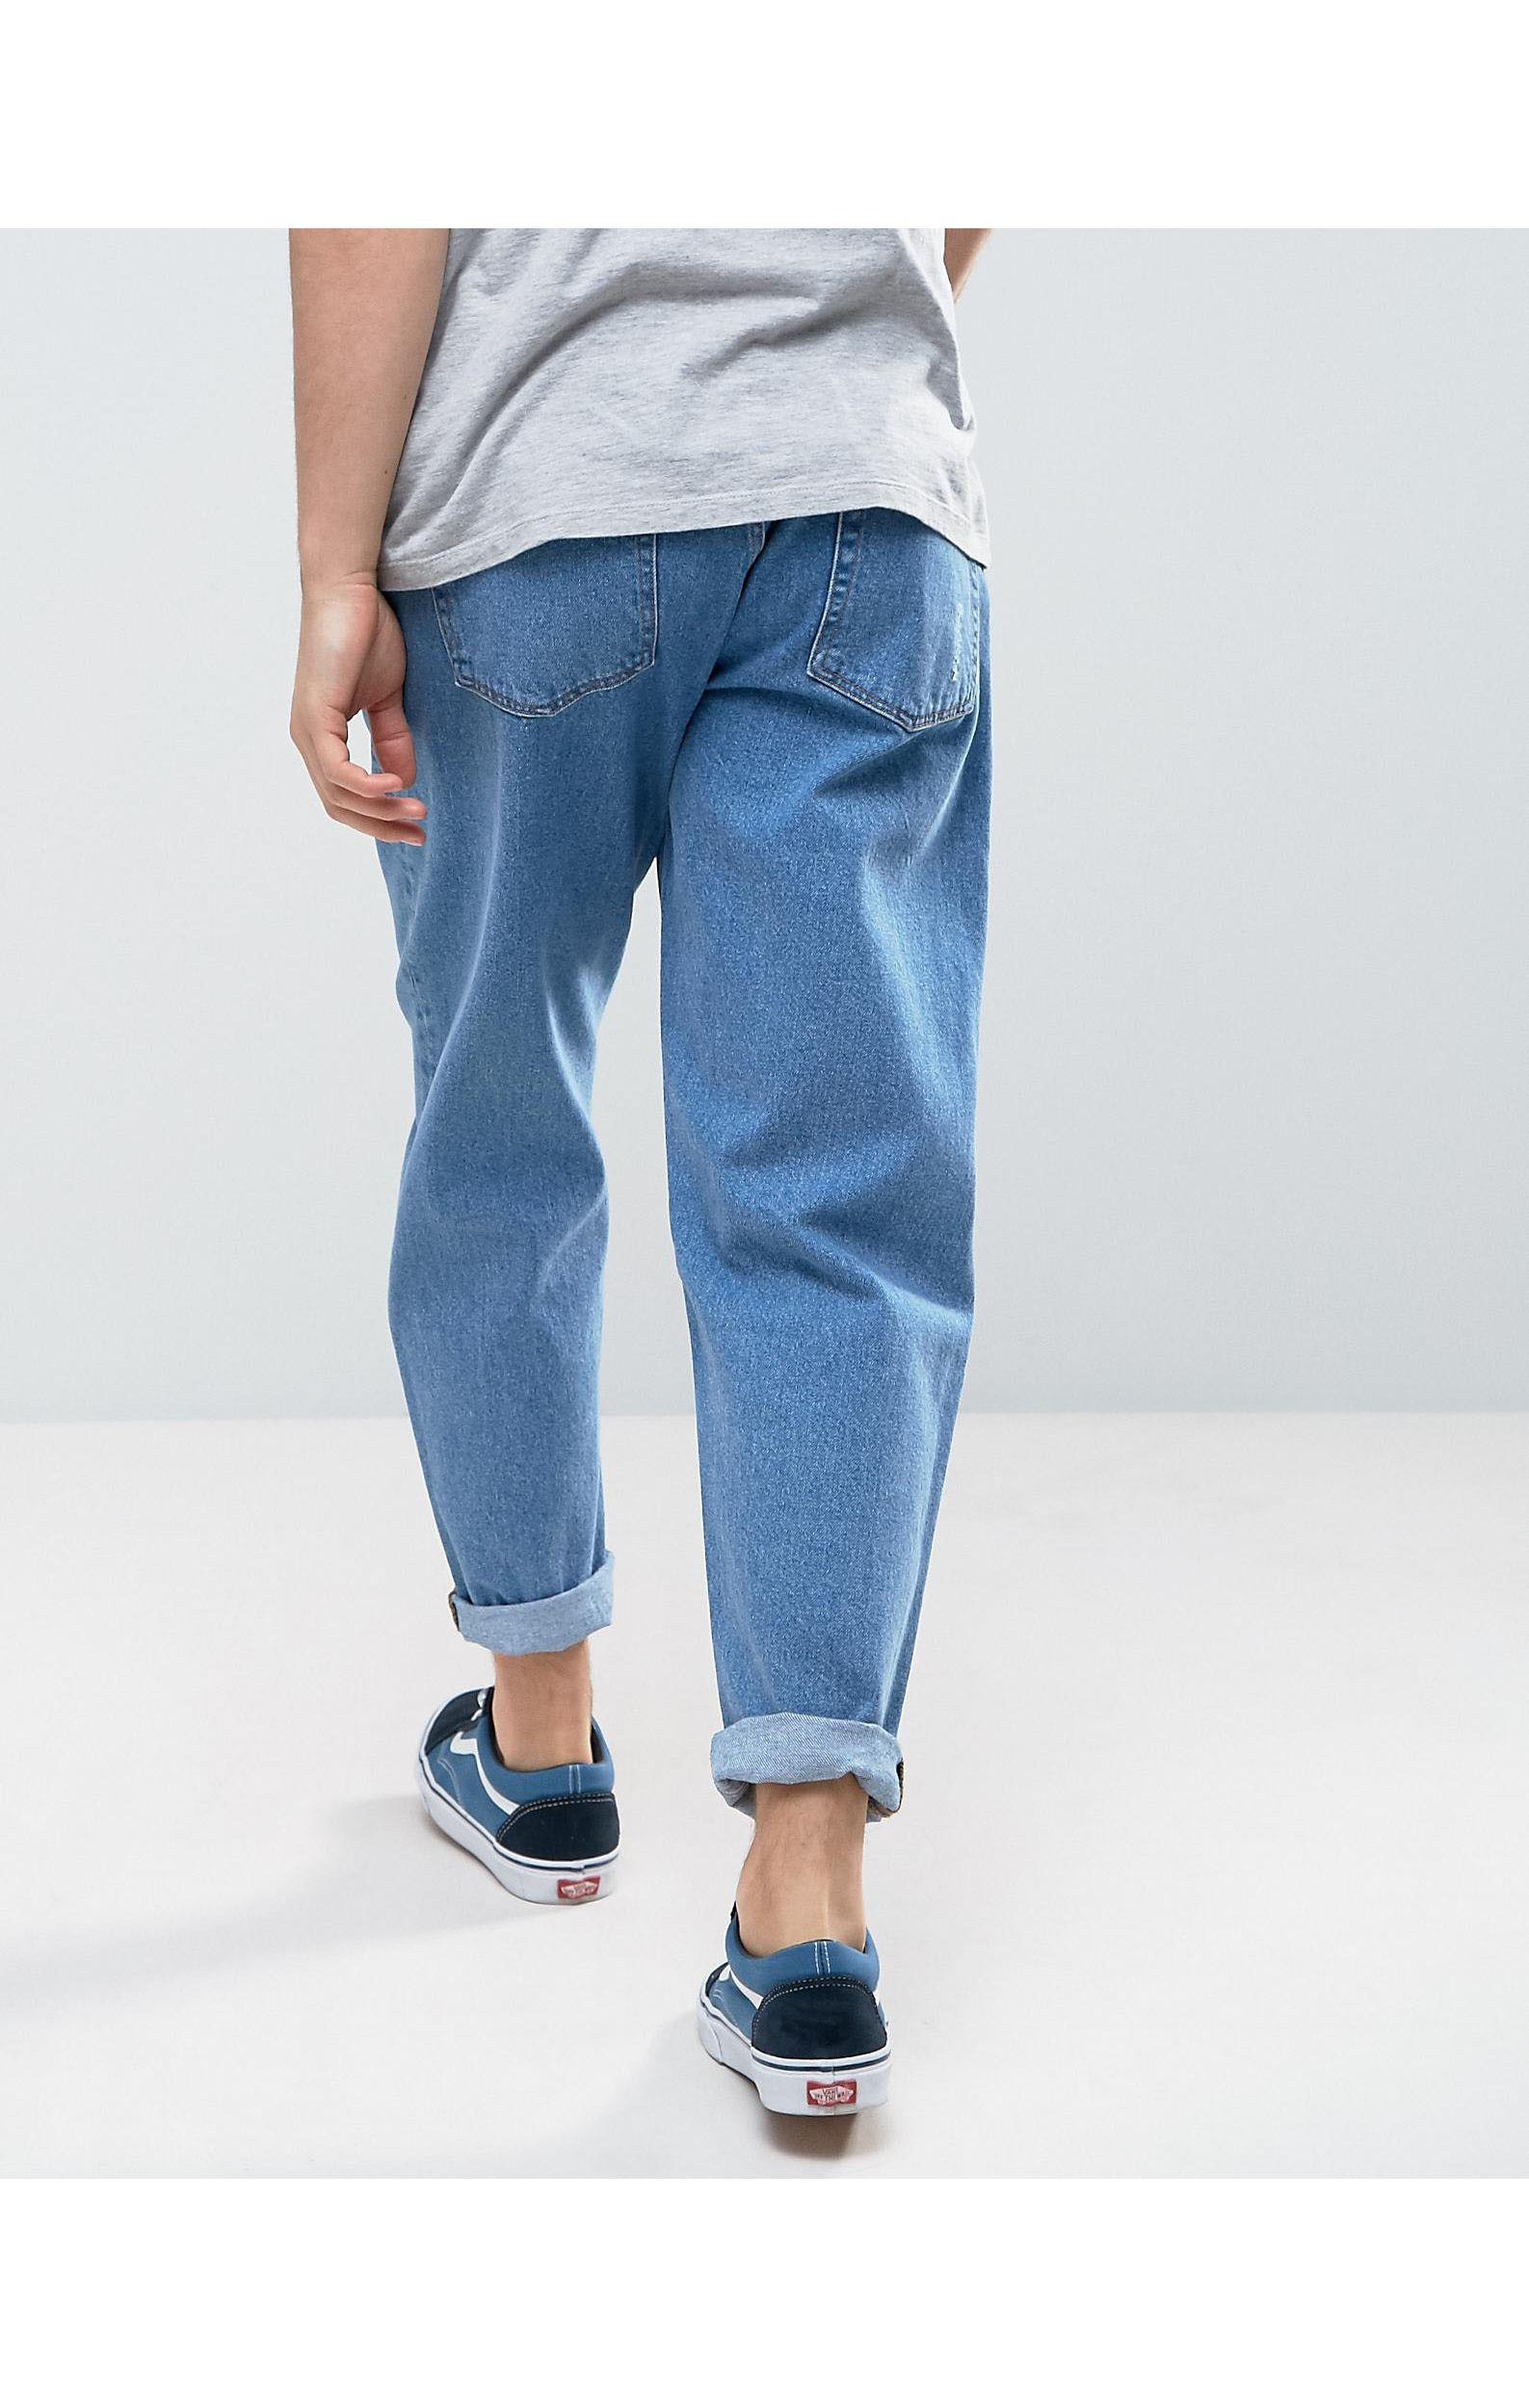 ASOS Asos Oversized Tapered Jeans In Vintage Mid Wash Blue for Men | Lyst